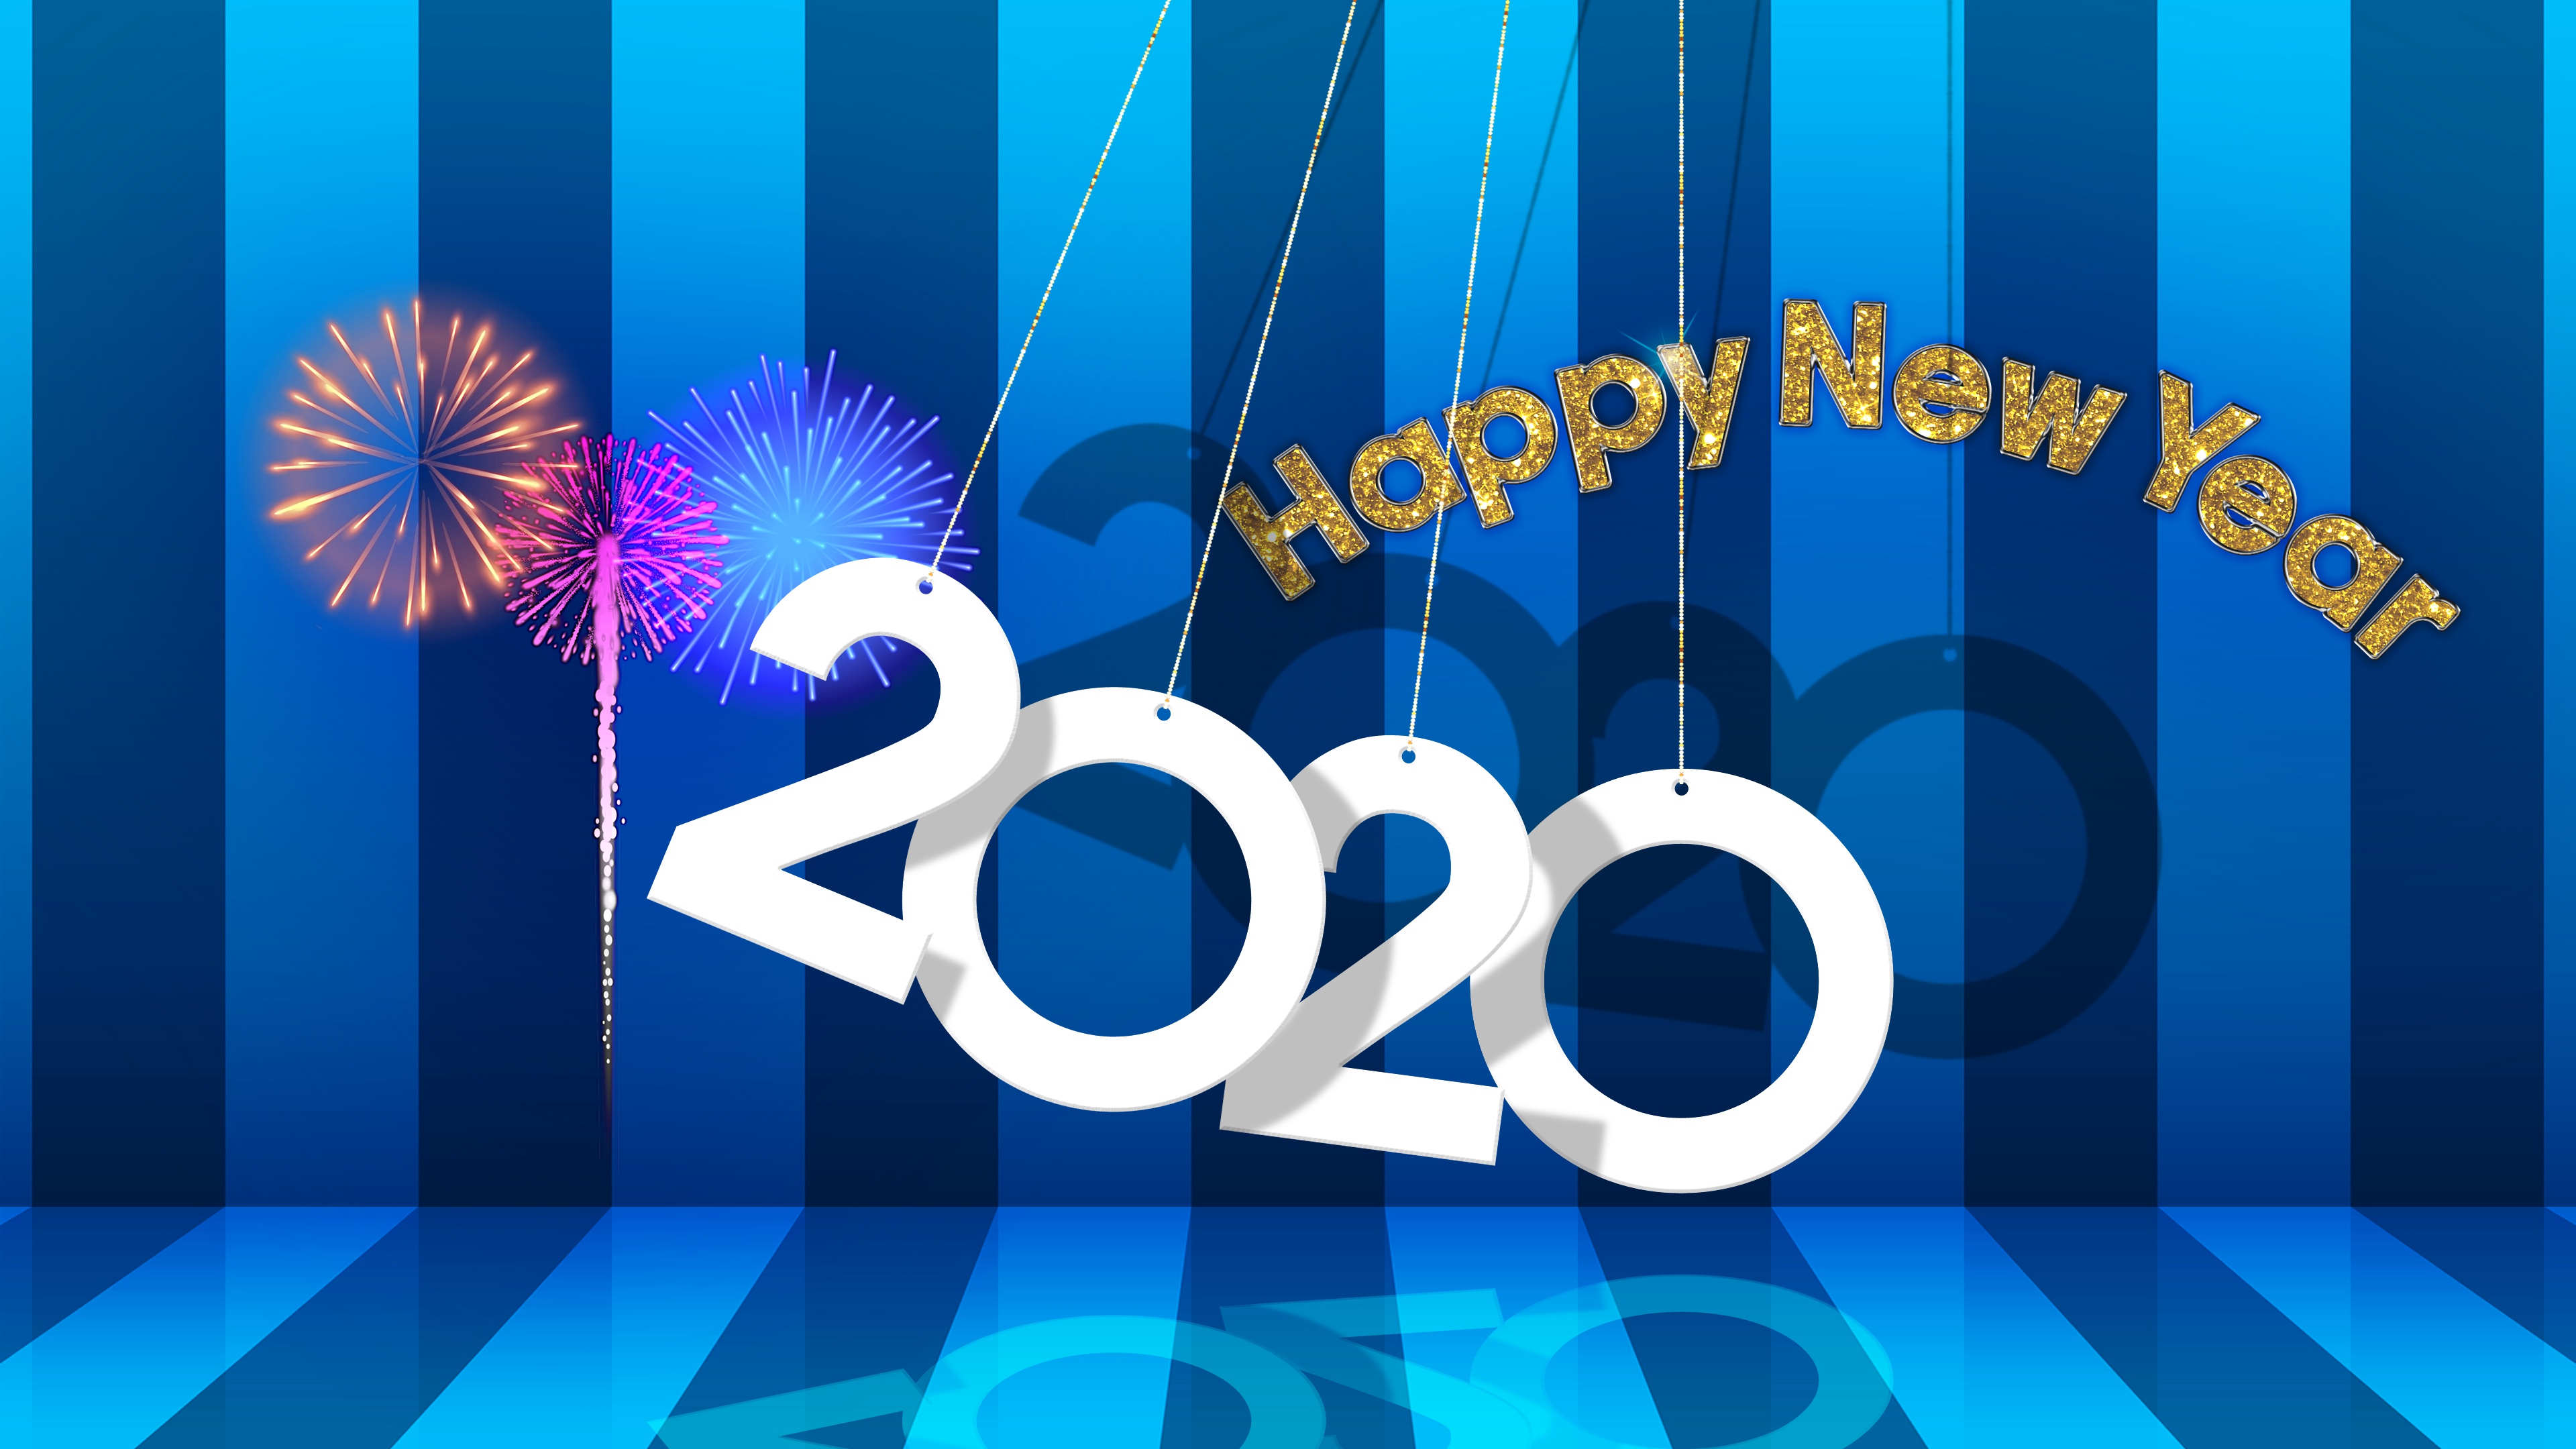 New Year 2020 4k Ultra HD Wallpaper Background Image 3840x2160